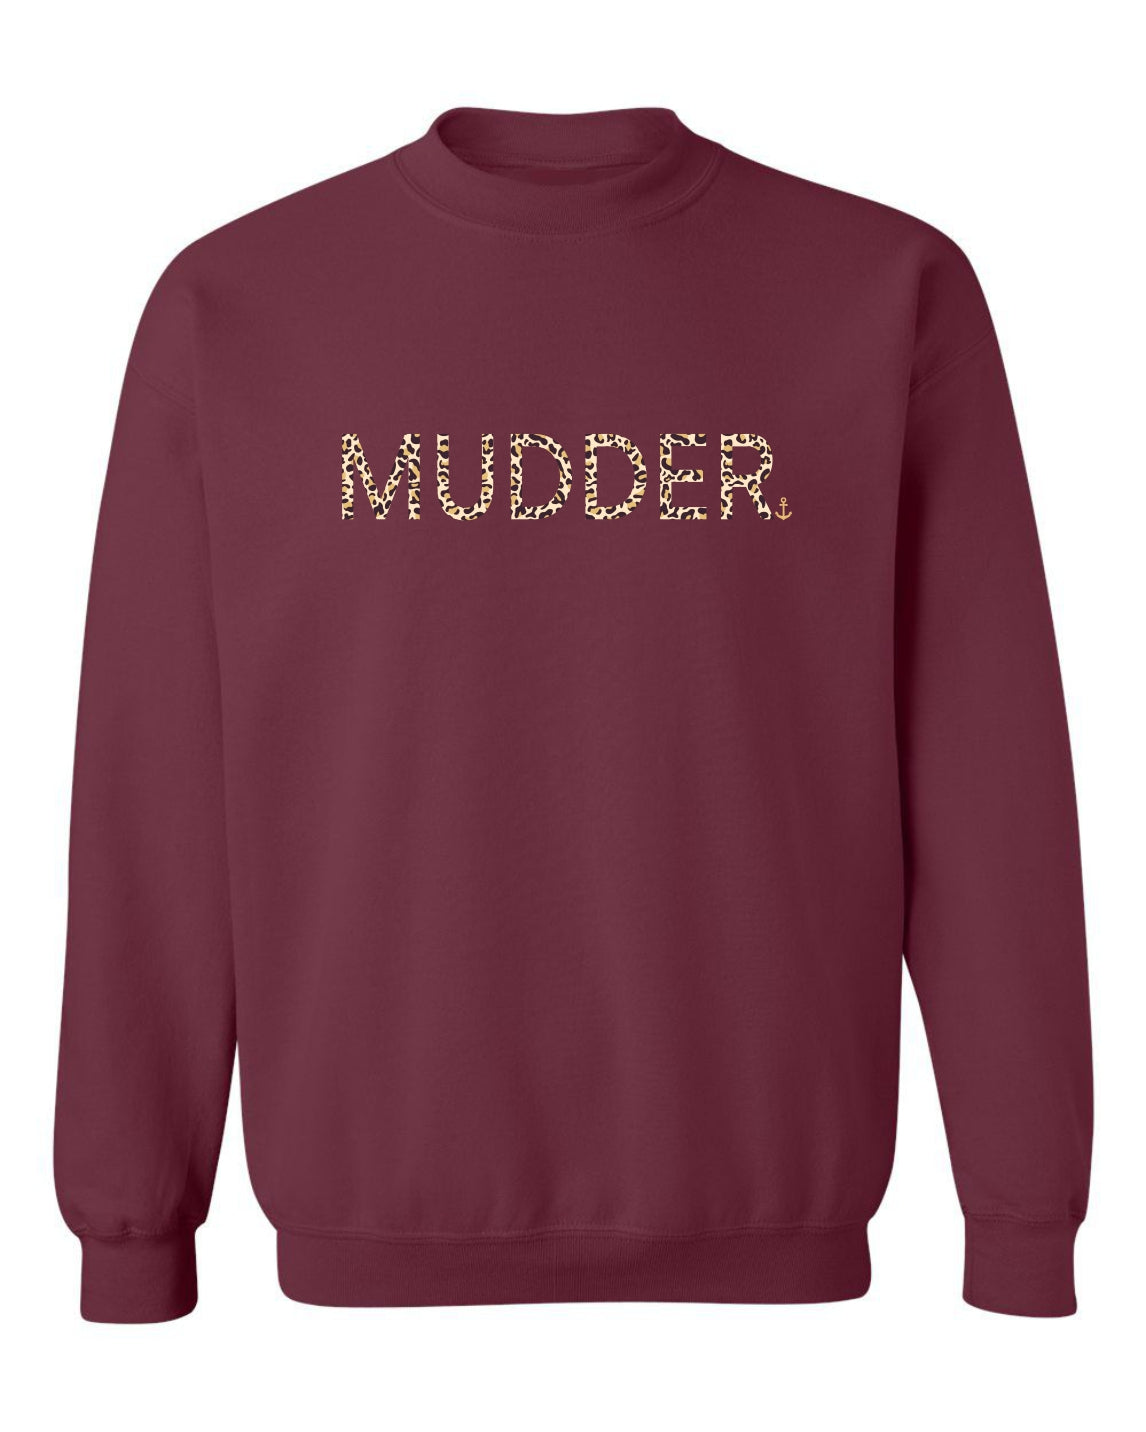 "Mudder" Cheetah Unisex Crewneck Sweatshirt